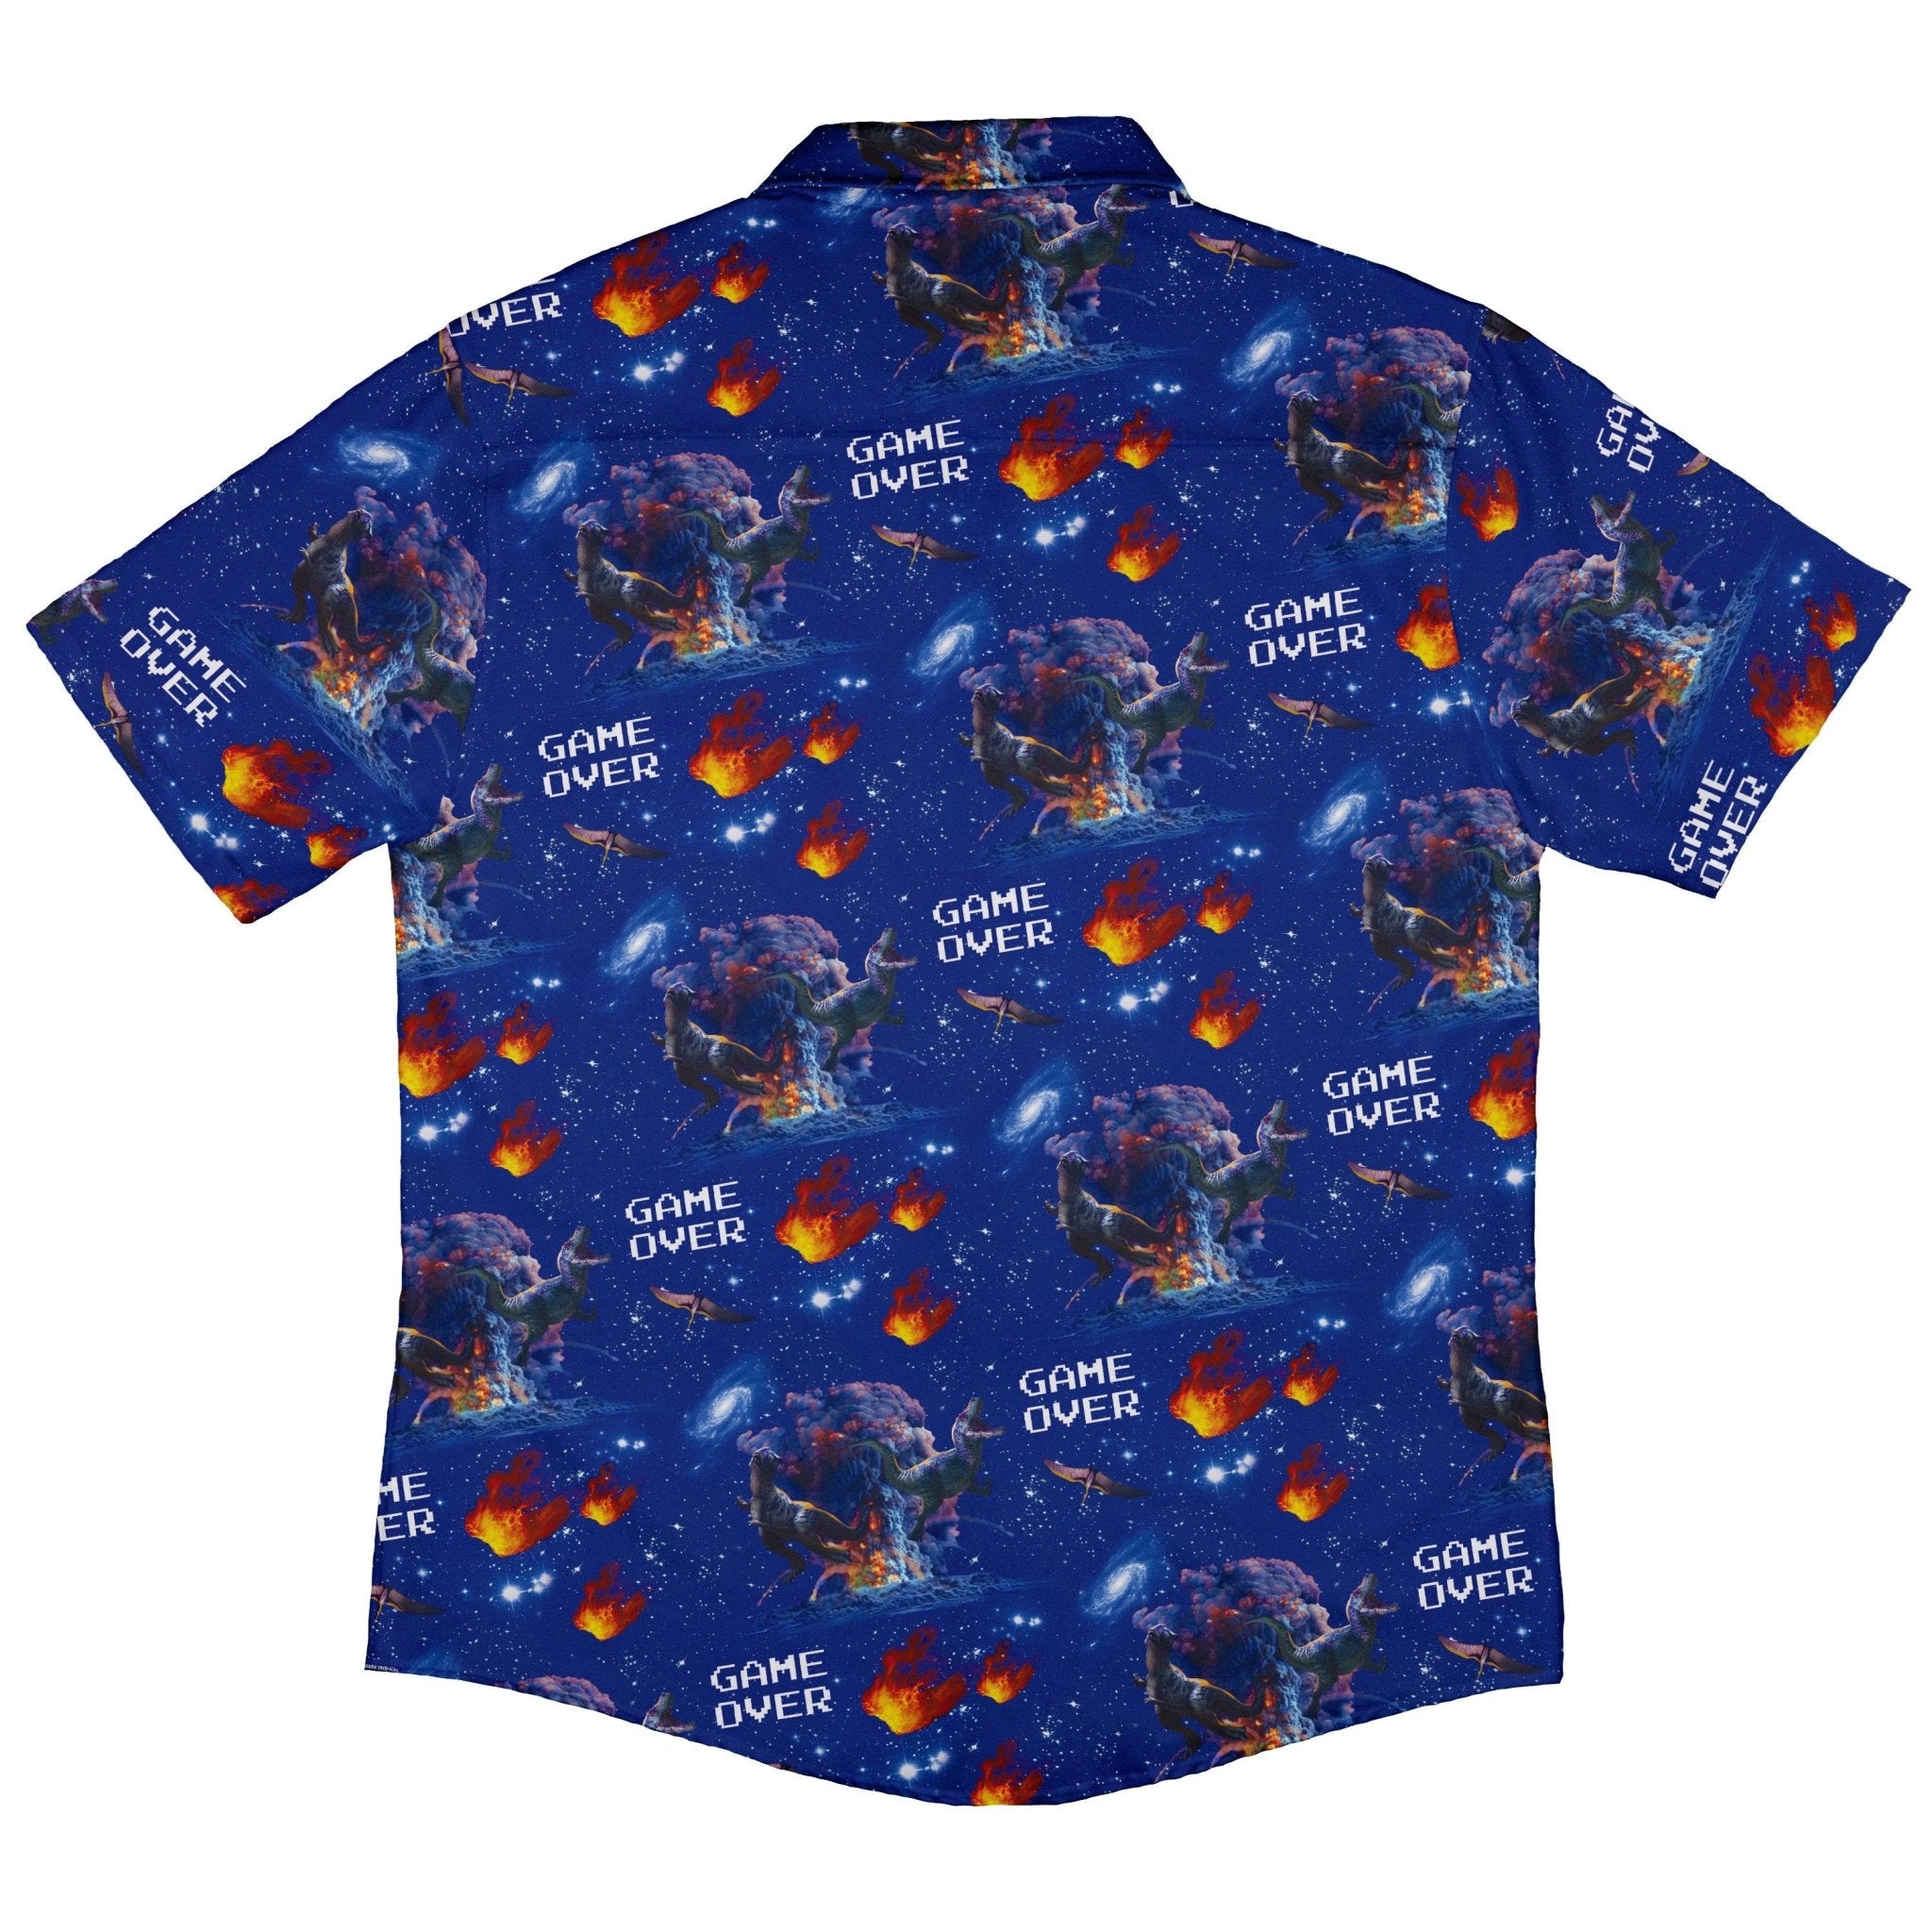 Dinosaur Game Over Button Up Shirt - adult sizing - Design by Random Galaxy - dinosaur print